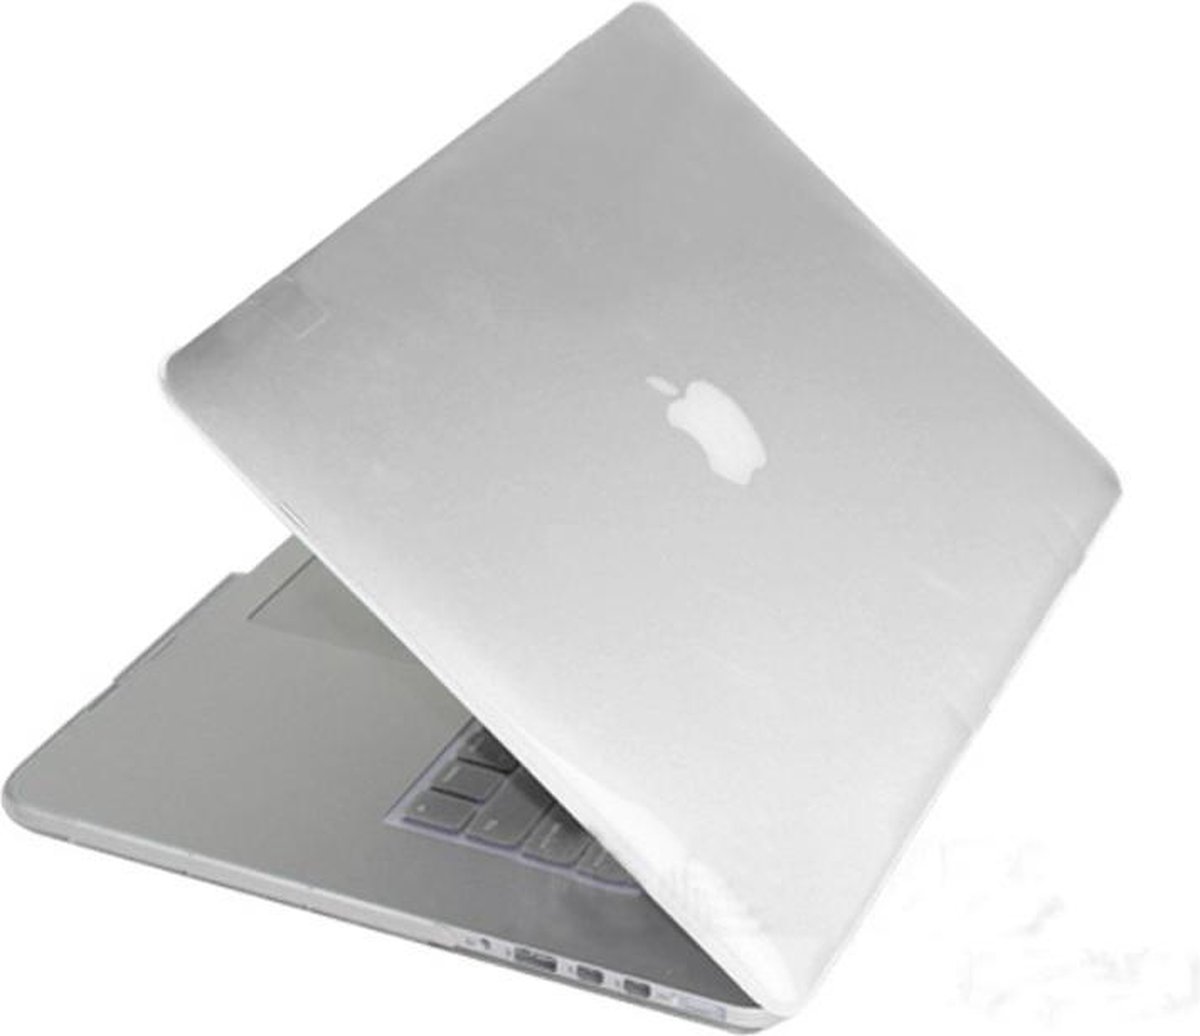 Enkay Series Crystal Hard beschermings hoesje voor Macbook Pro Retina 13.3 inch (transparant)